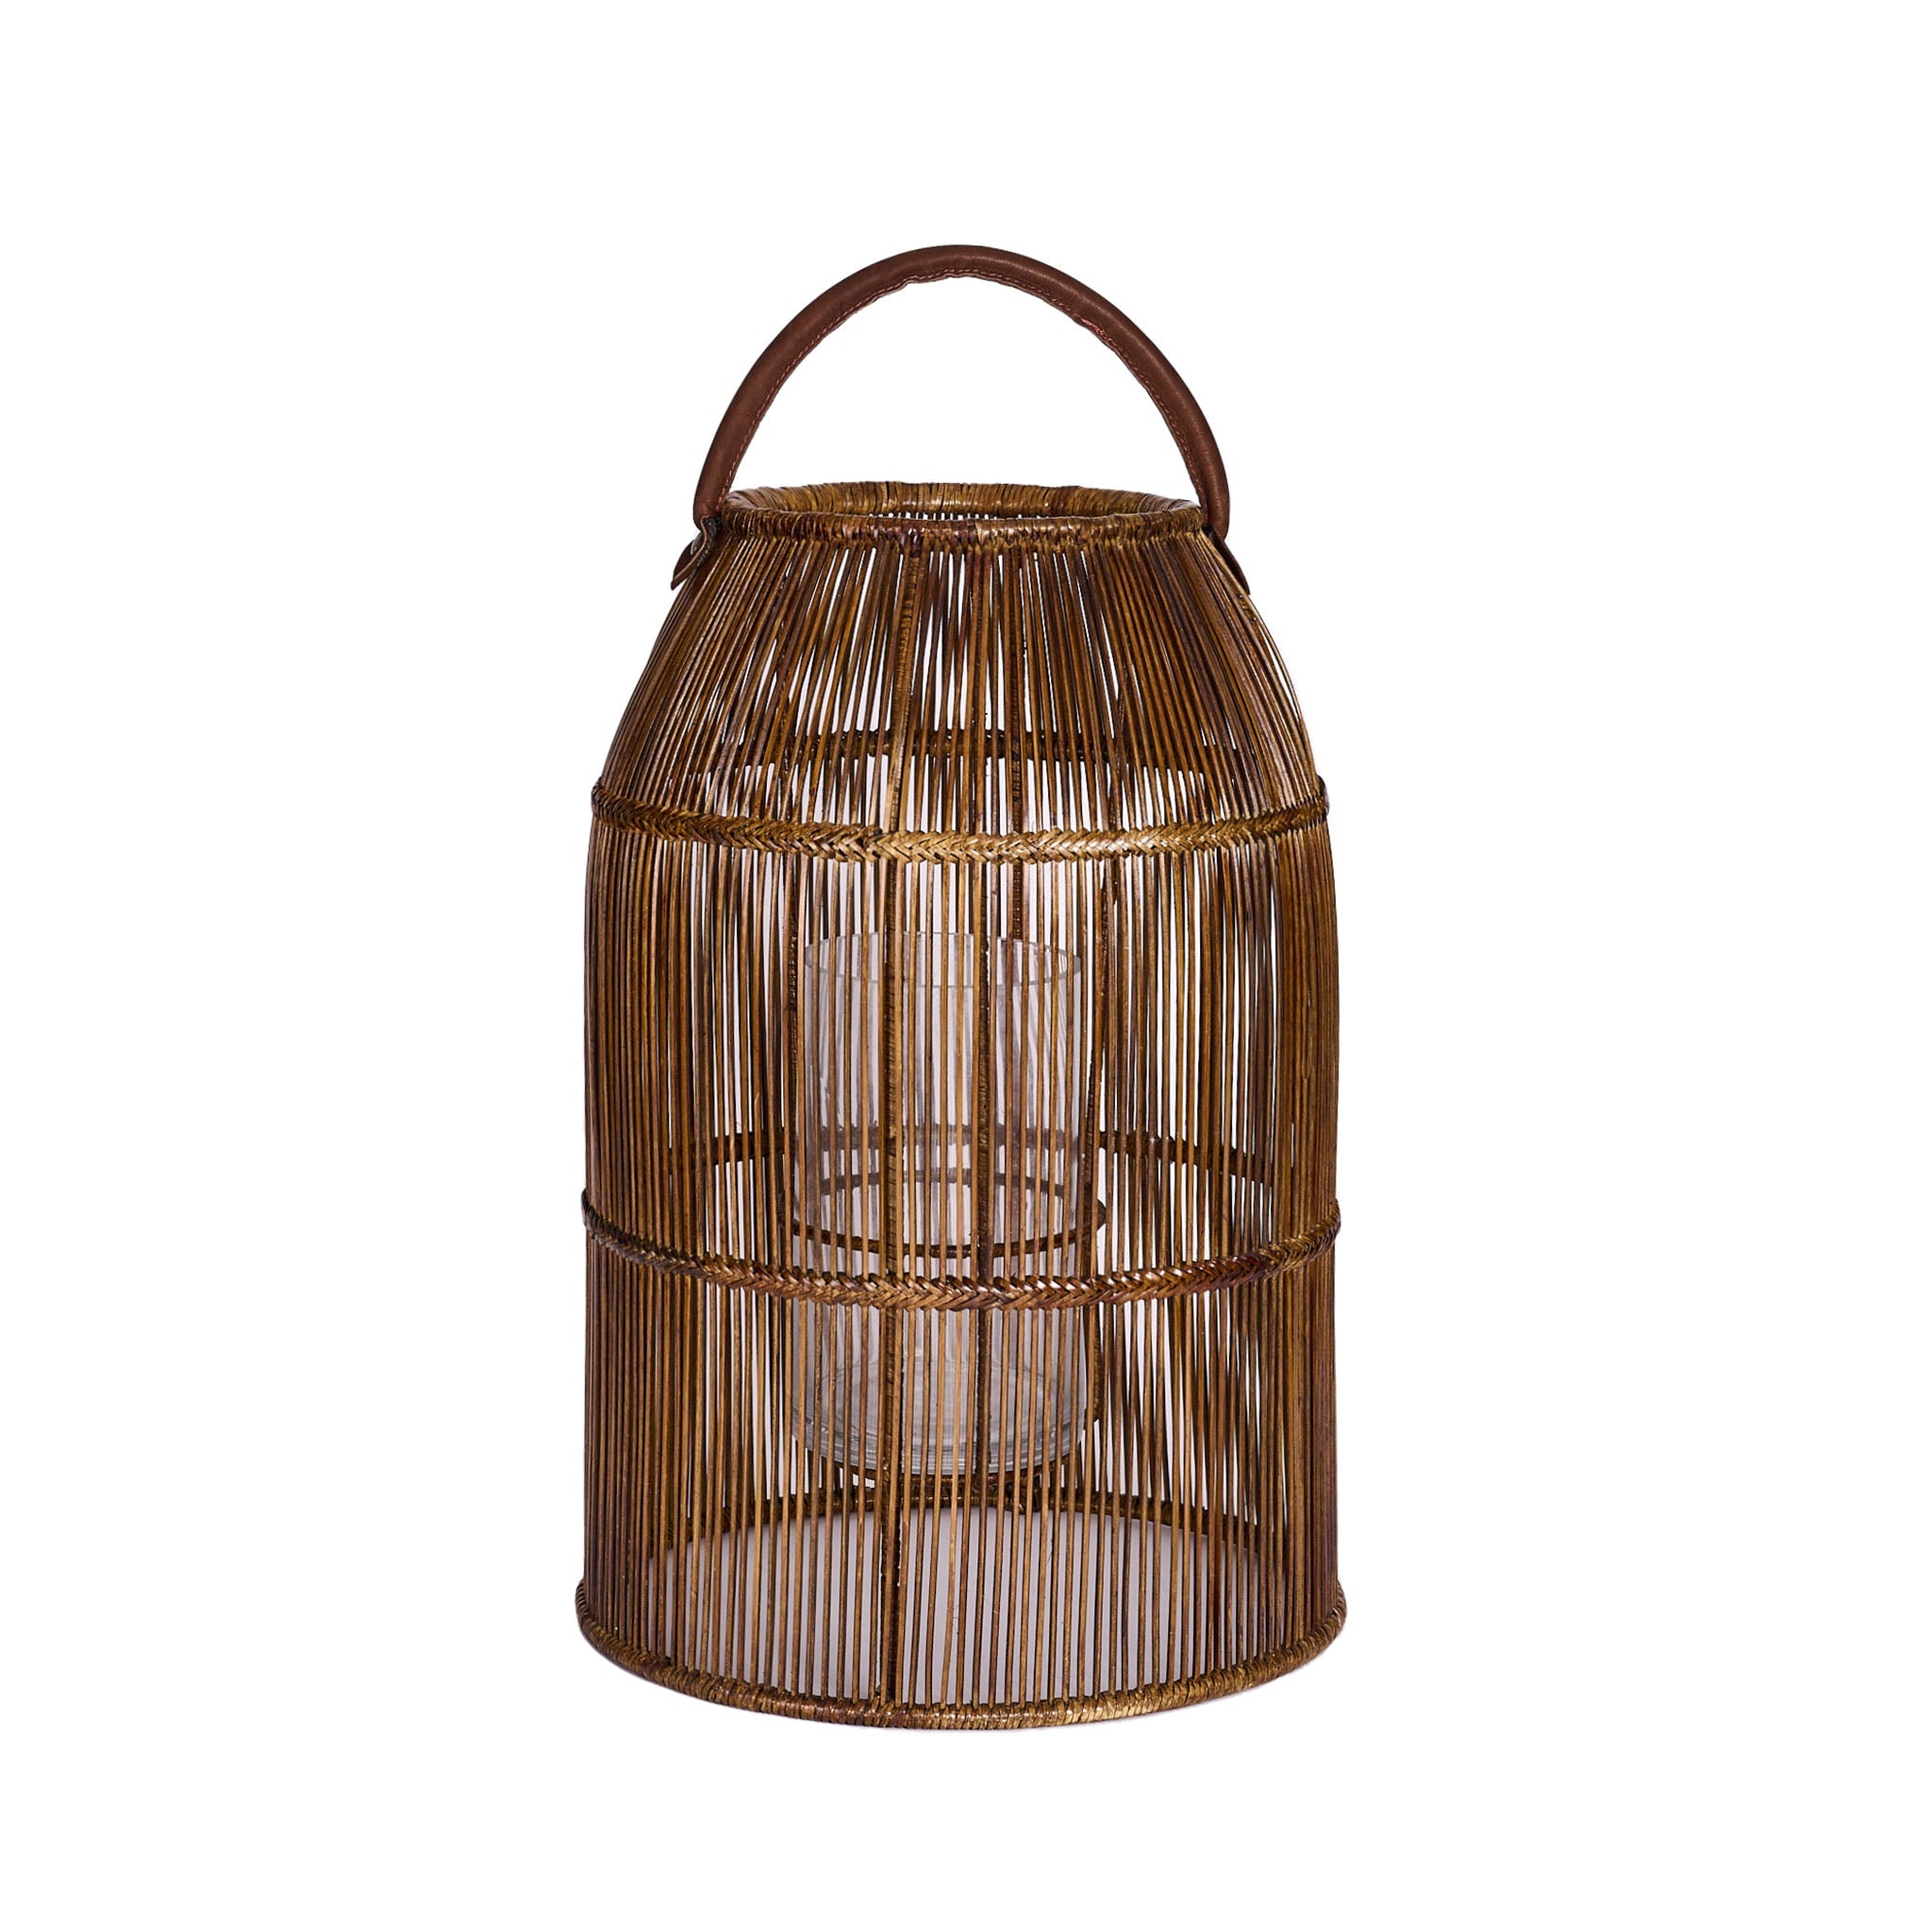 Rattan y linterna de bambú natural